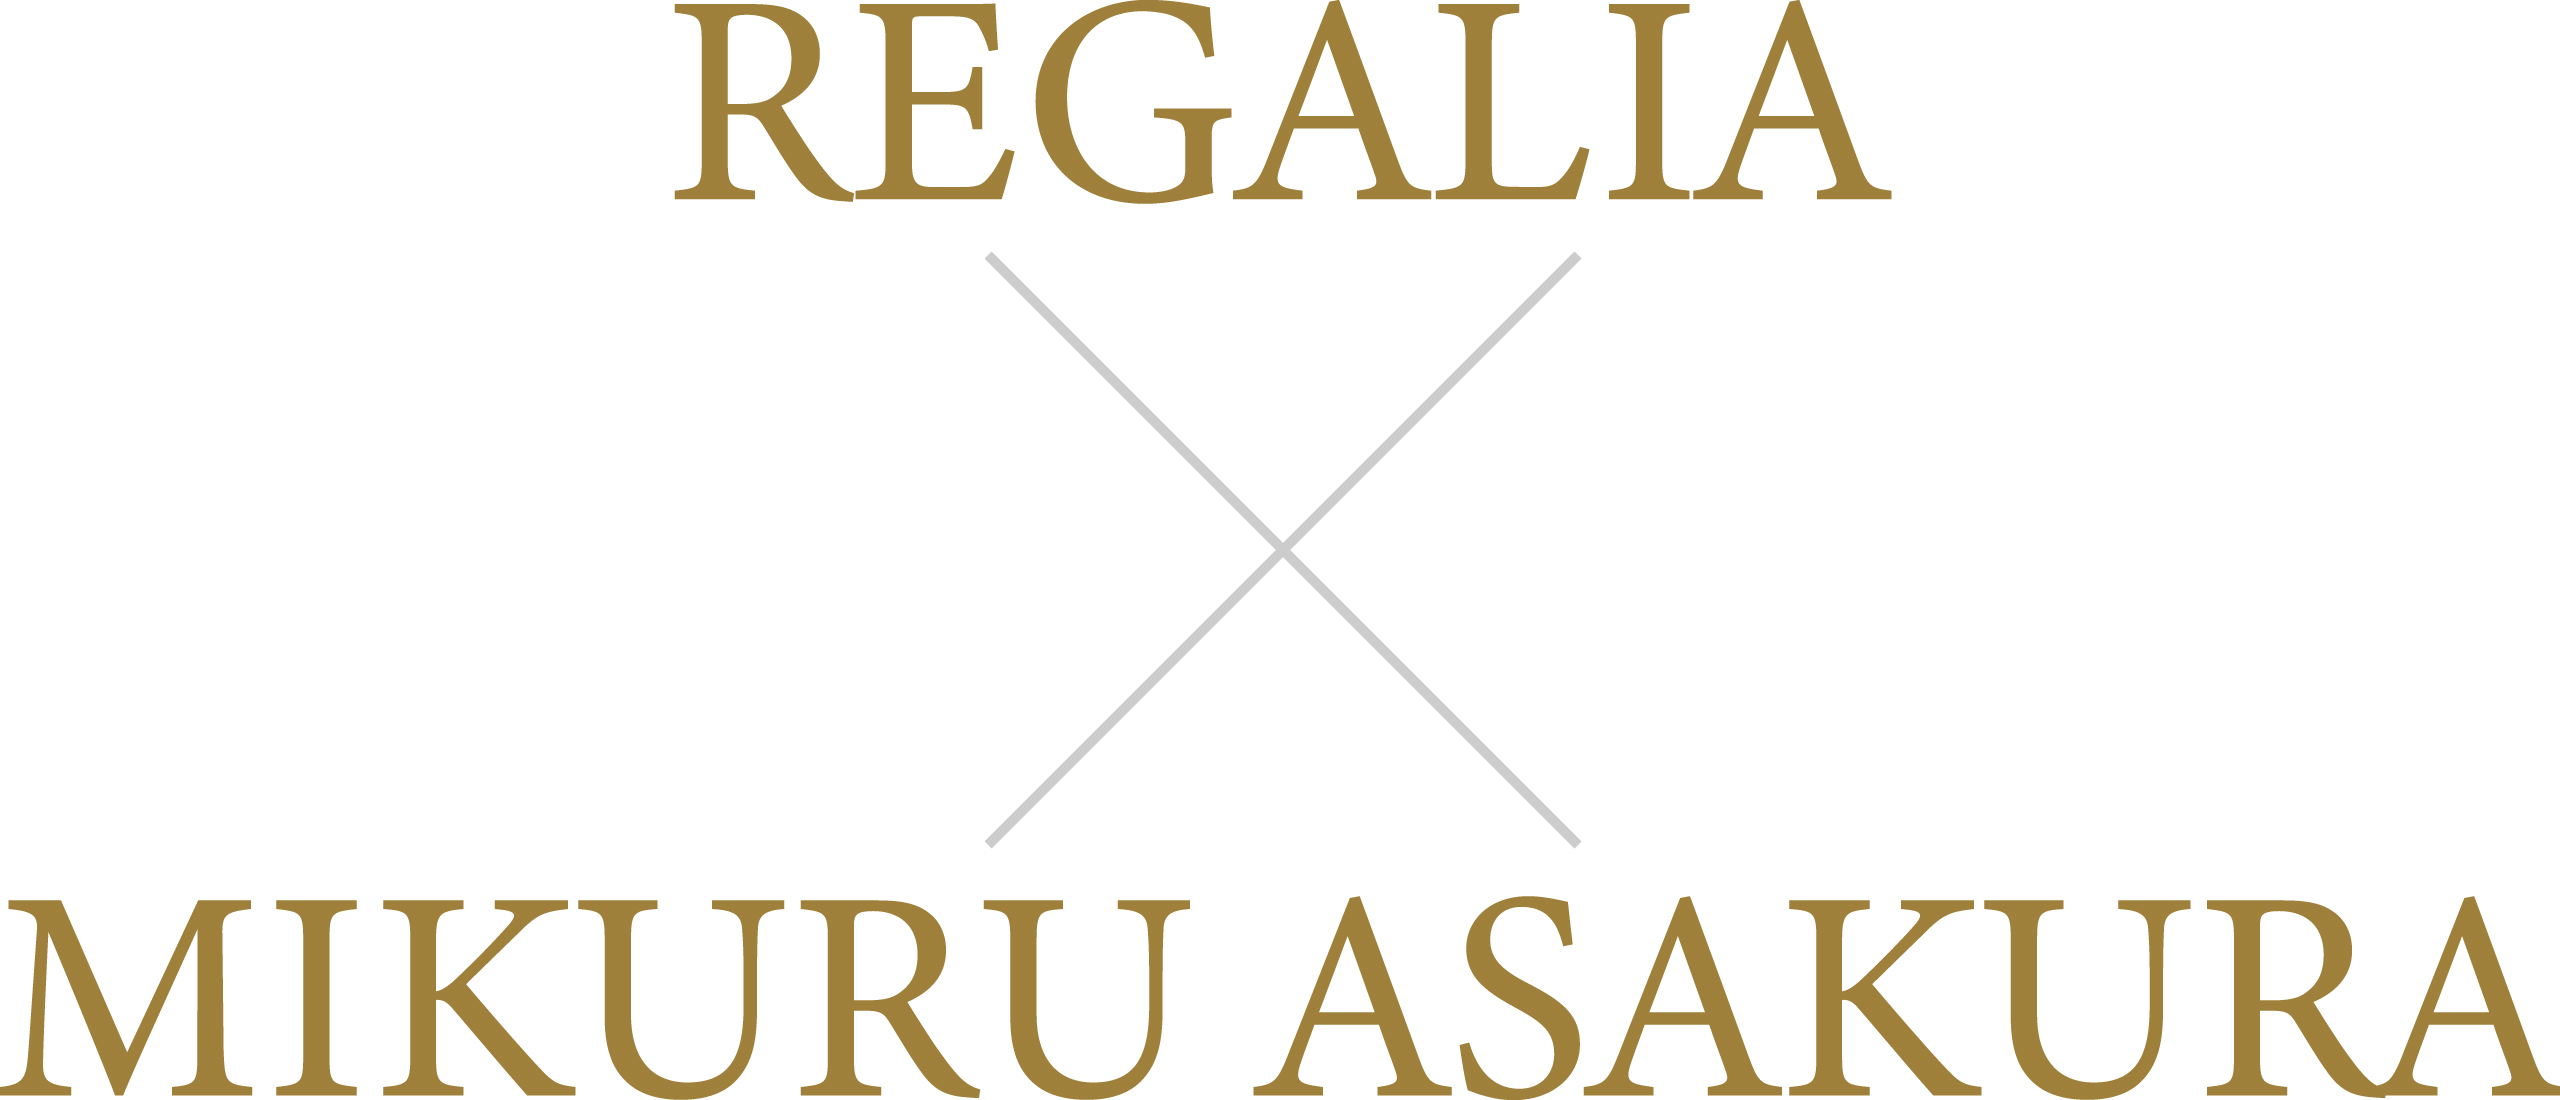 REGALIA/MIKURU ASAKURA